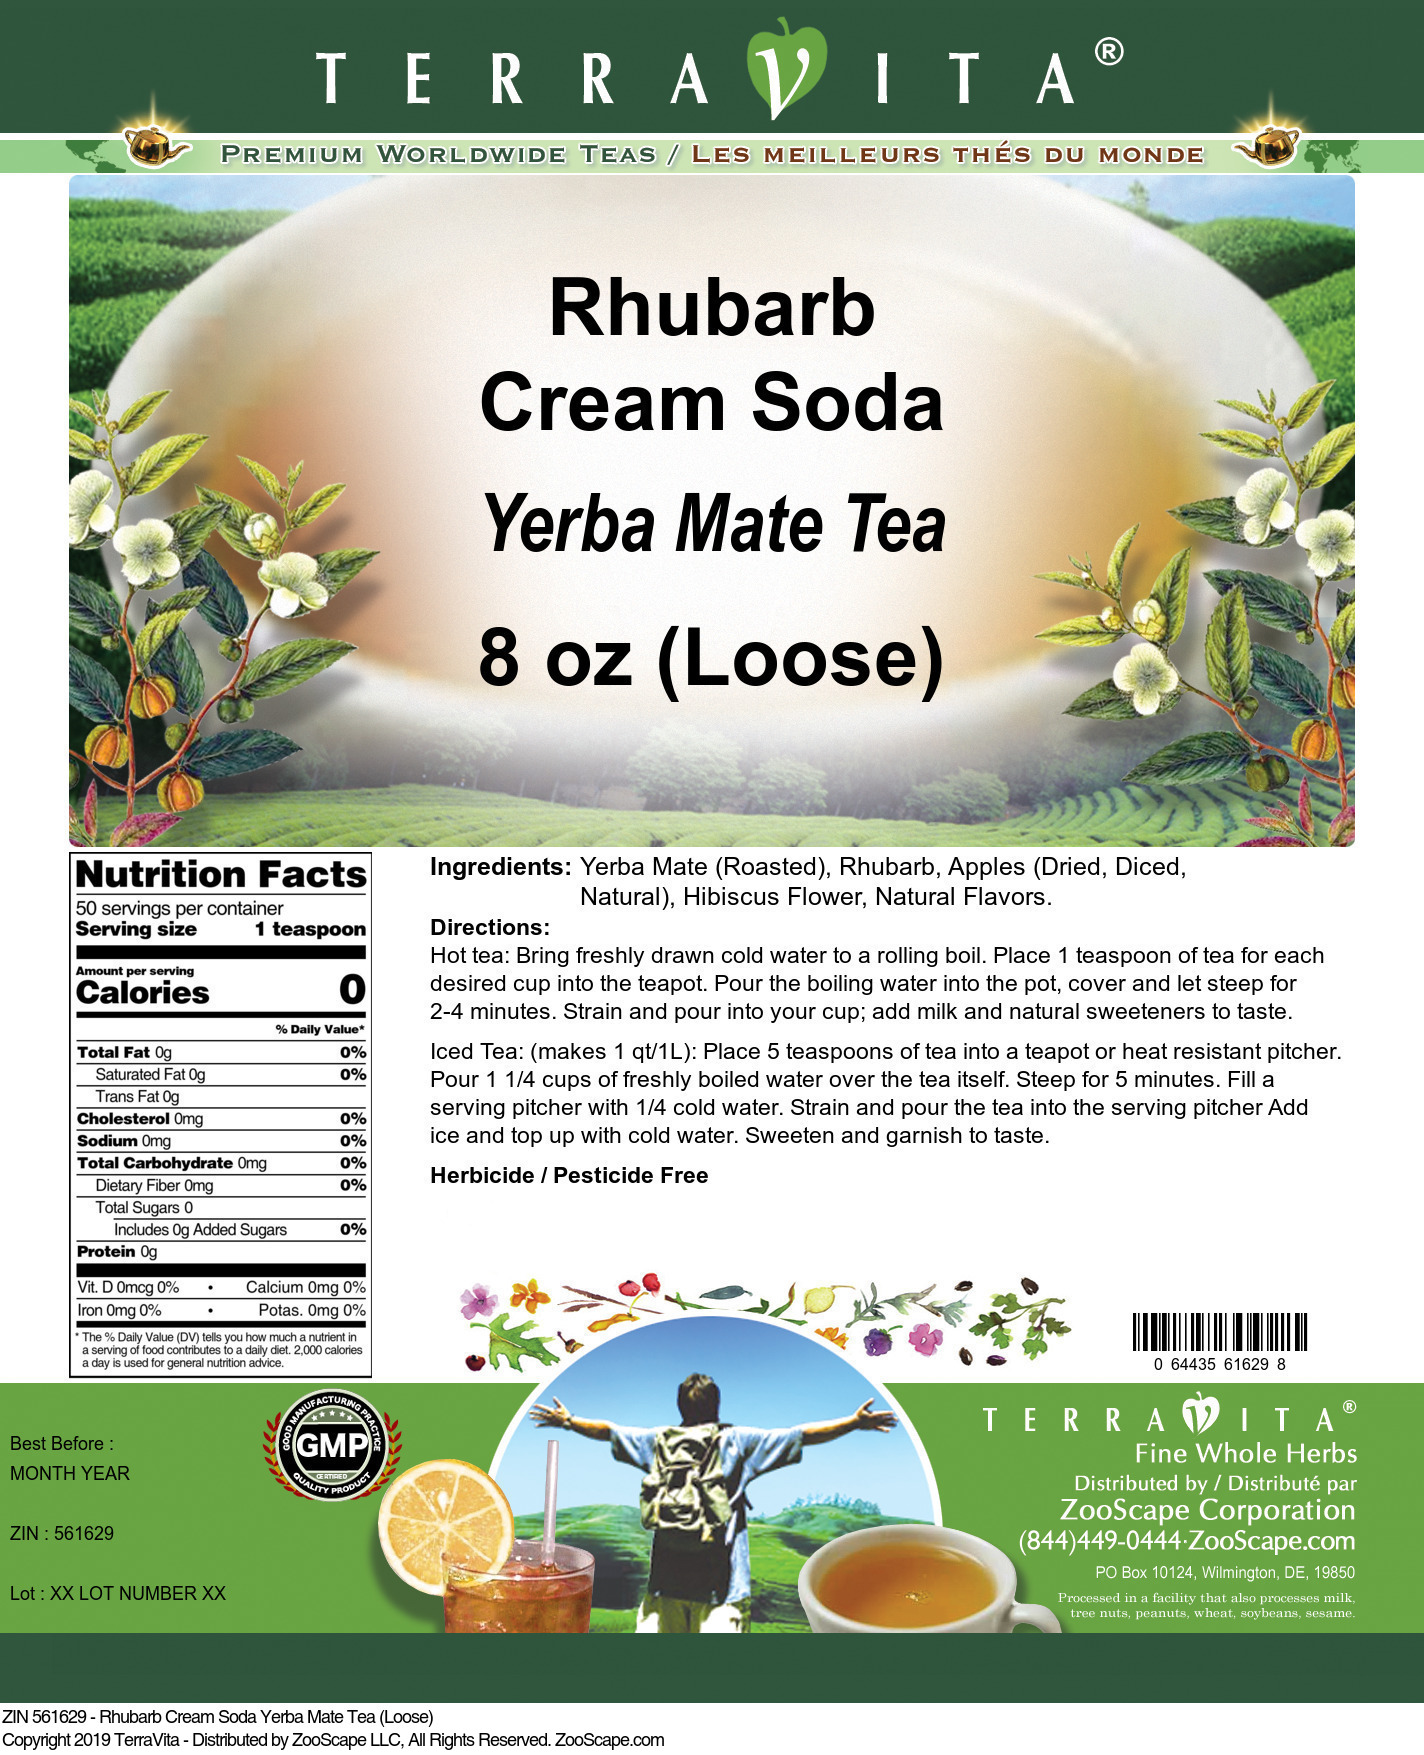 Rhubarb Cream Soda Yerba Mate Tea (Loose) - Label